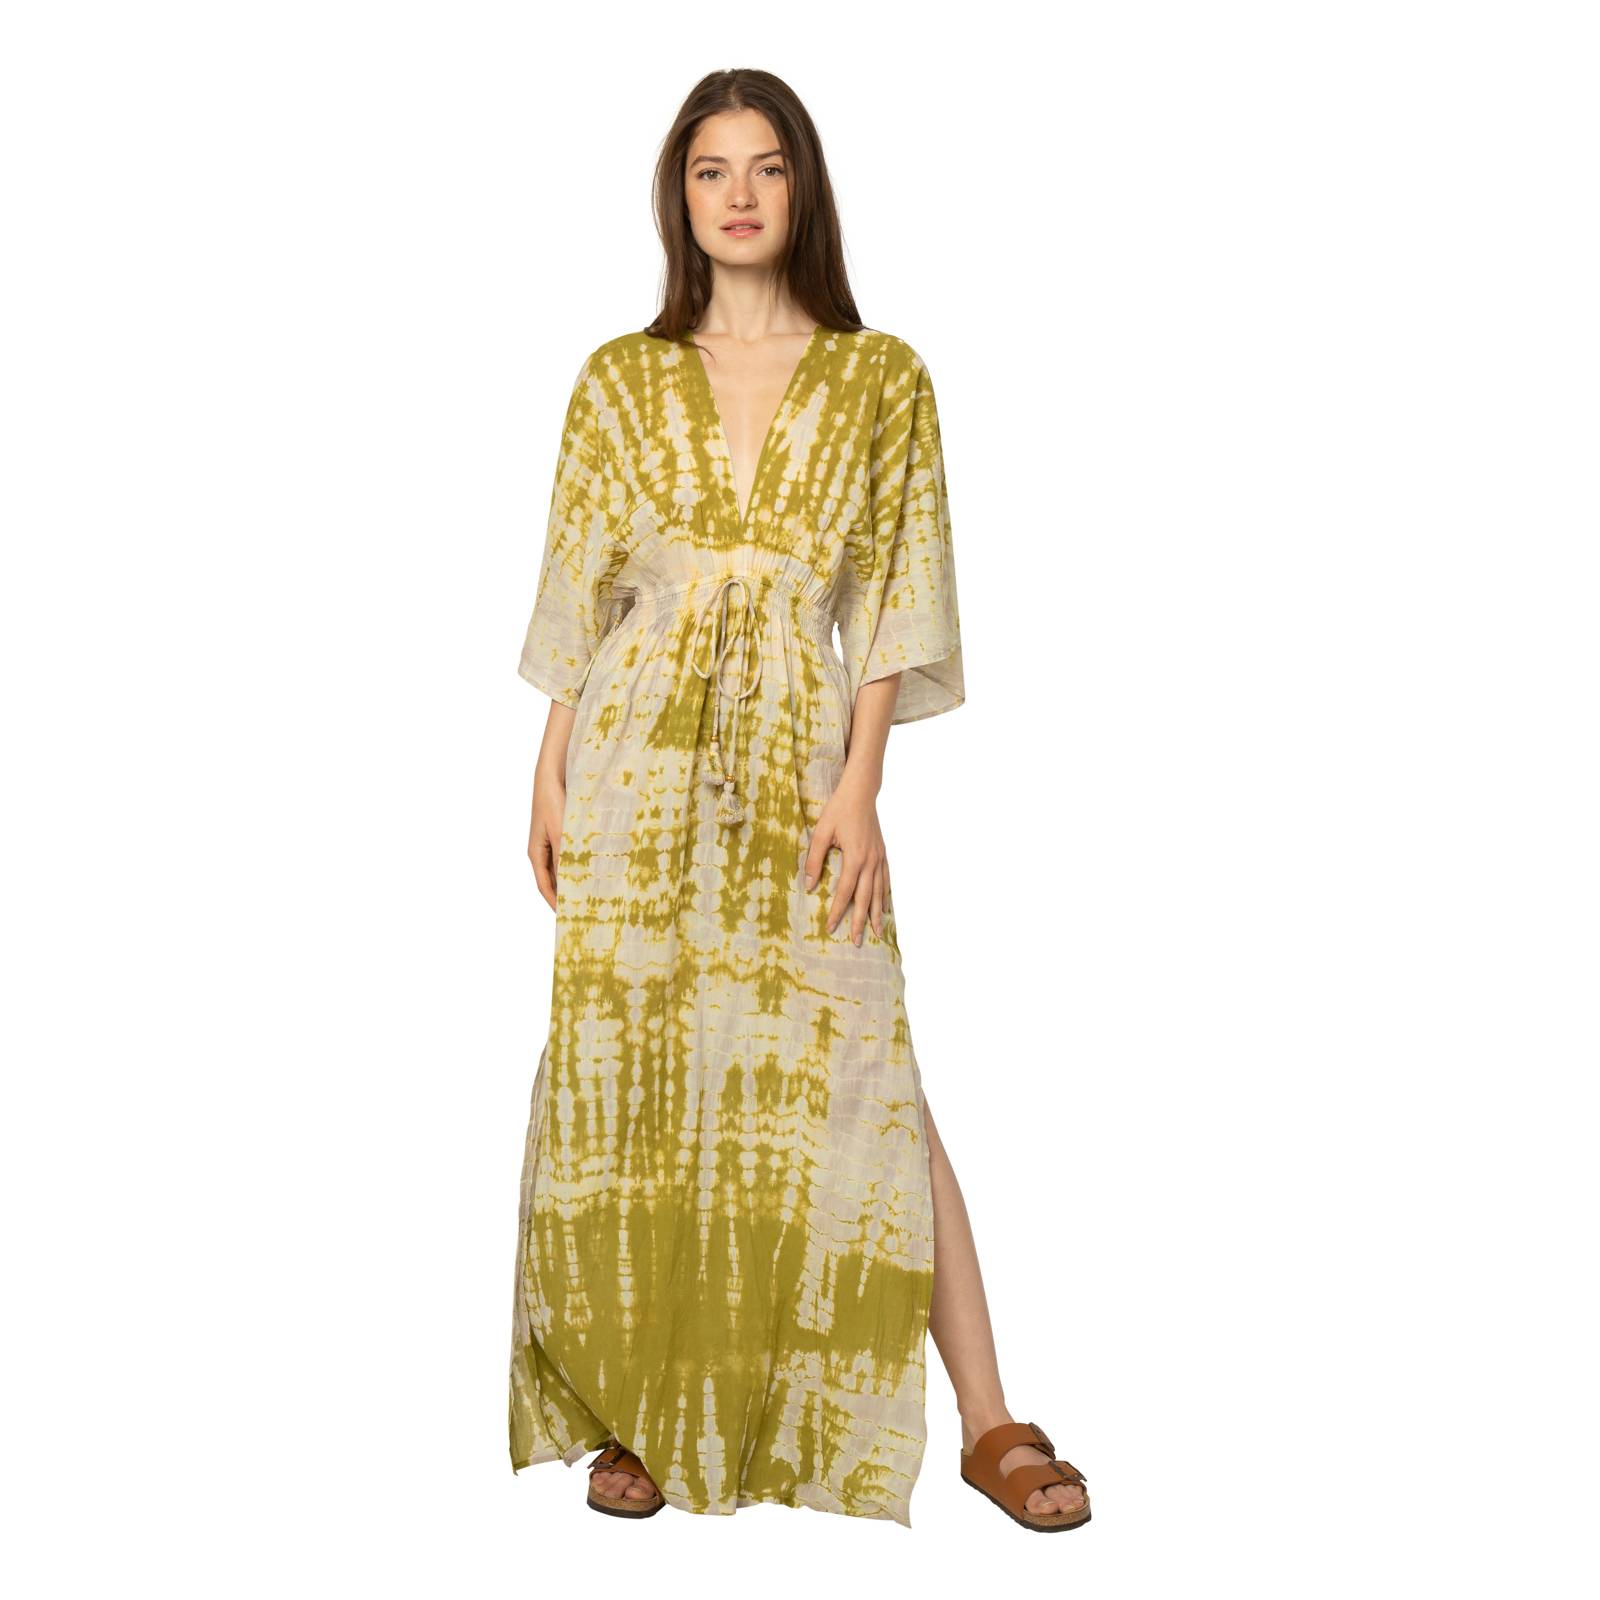 Robes Robe bohème Lomano Tie & Dye - 100% Coton Ethnique VR3400 KAKI BEIGE